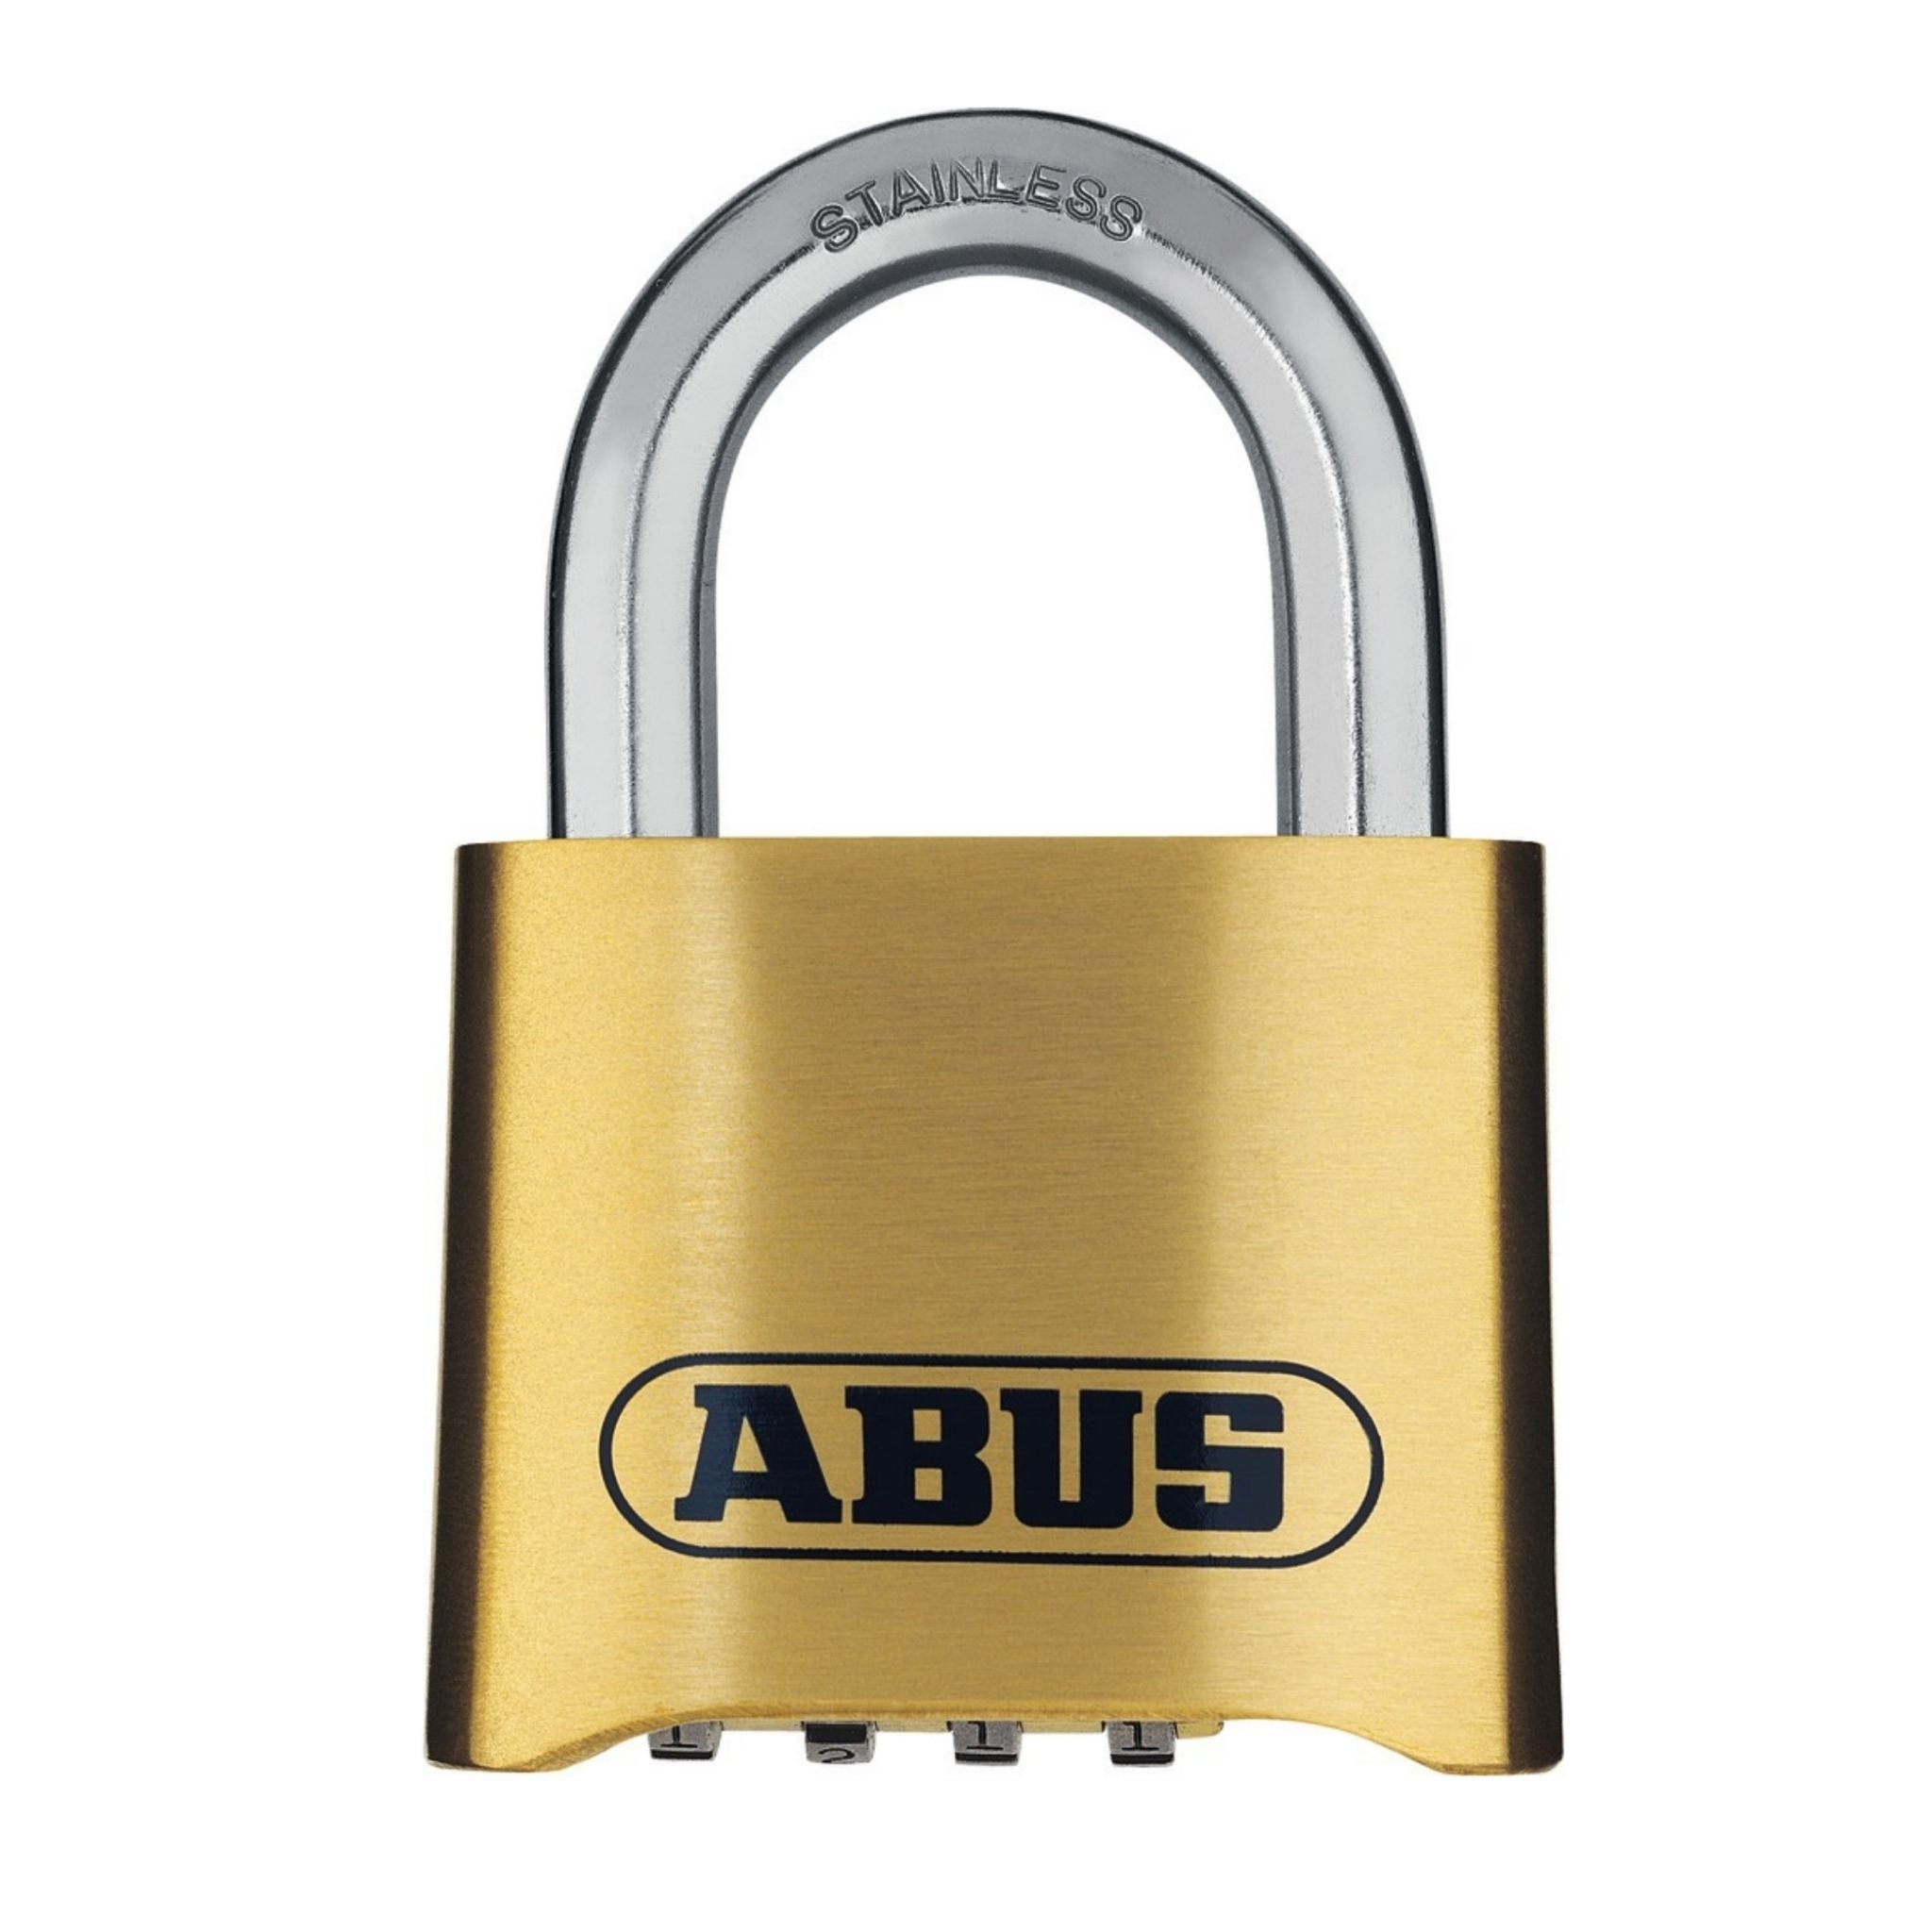 Abus 180IB Series Brass Combination Locks